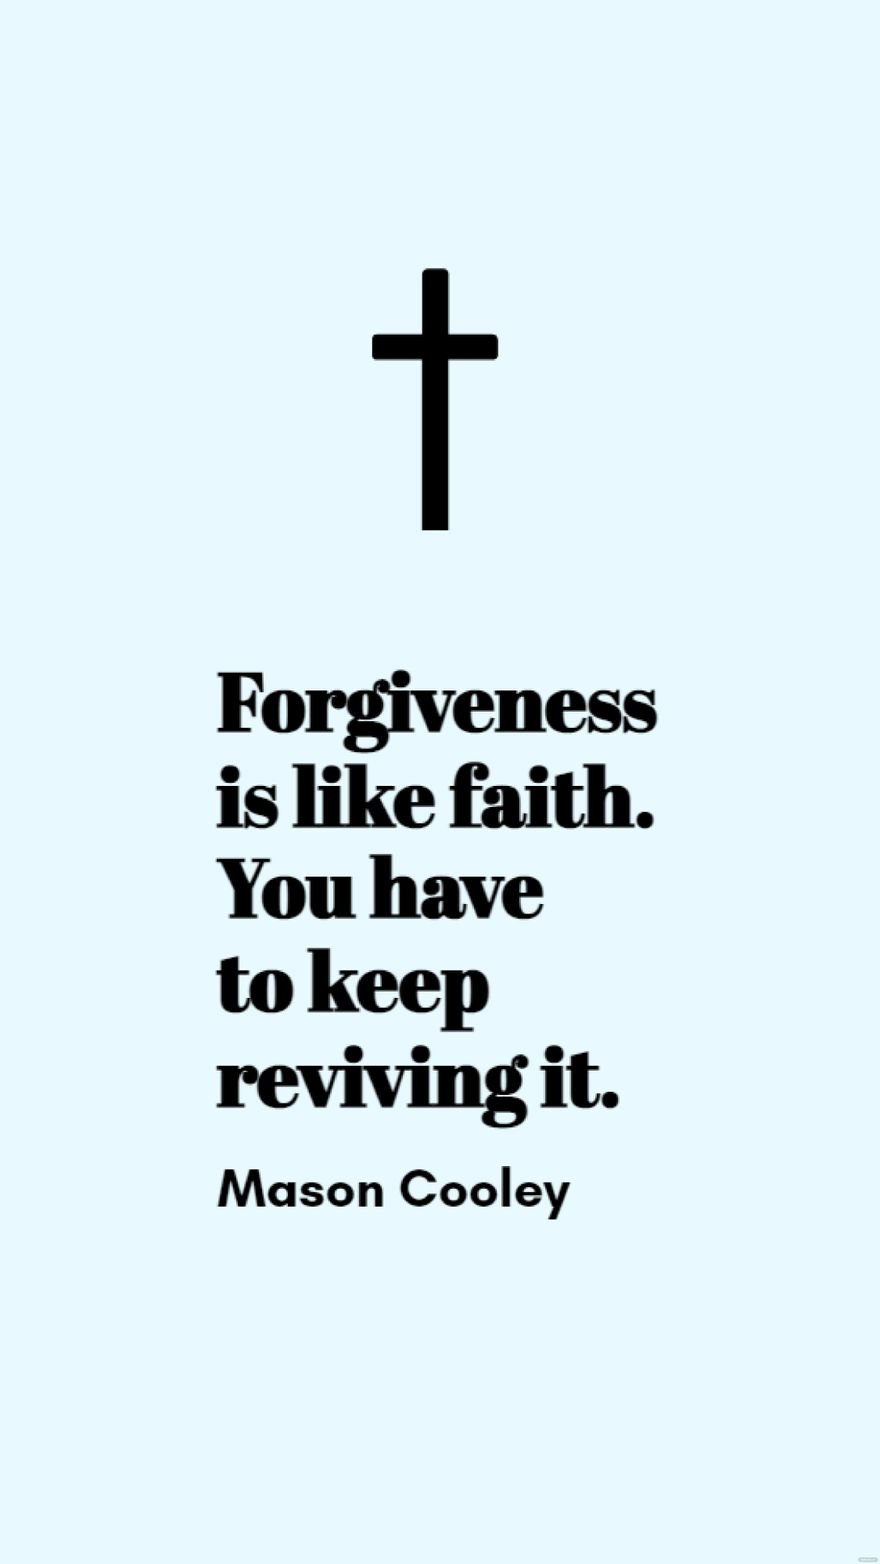 Free Mason Cooley - Forgiveness is like faith. You have to keep reviving it.